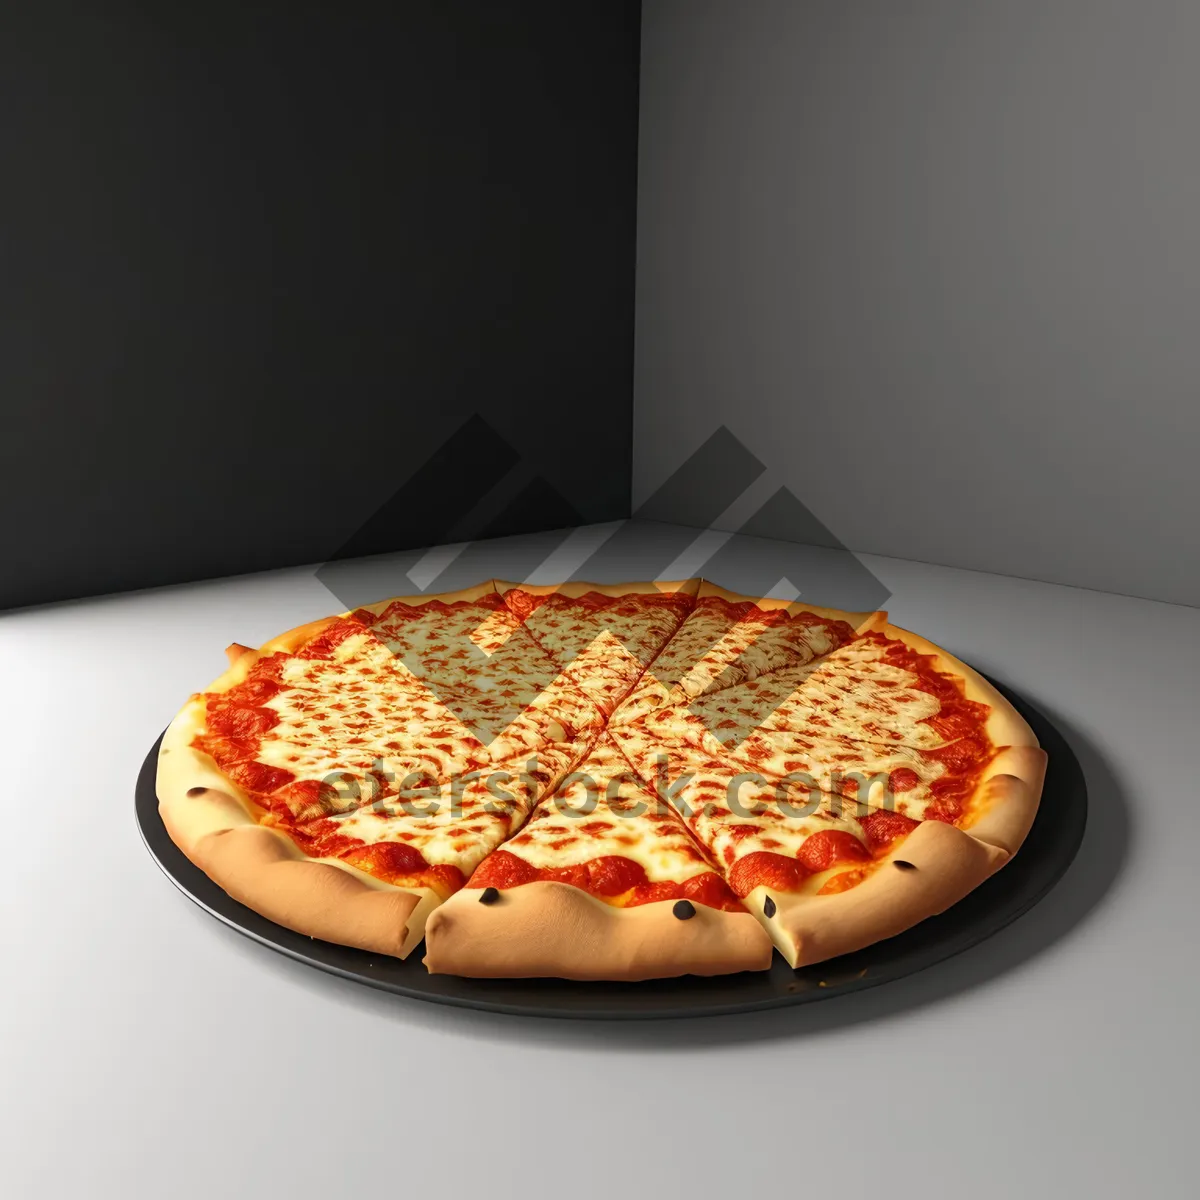 Picture of Delicious Pepperoni Pizza with Melty Mozzarella